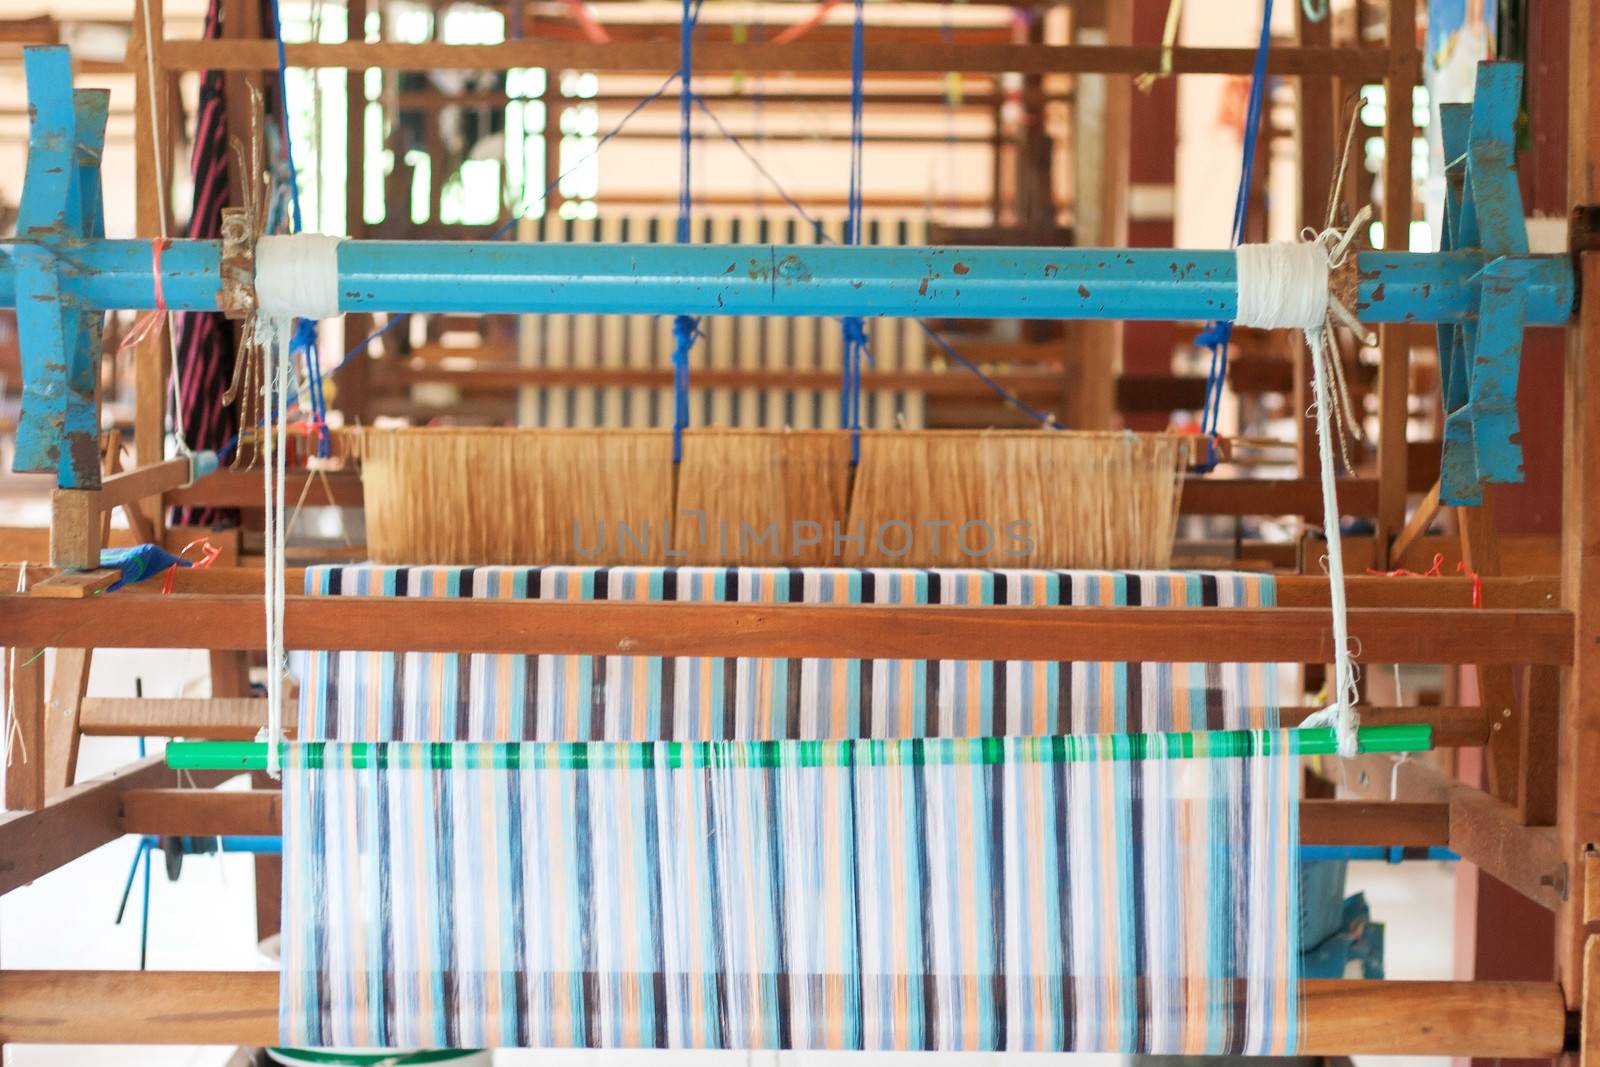 Silk weaving on a hand loom in thailand by myrainjom01